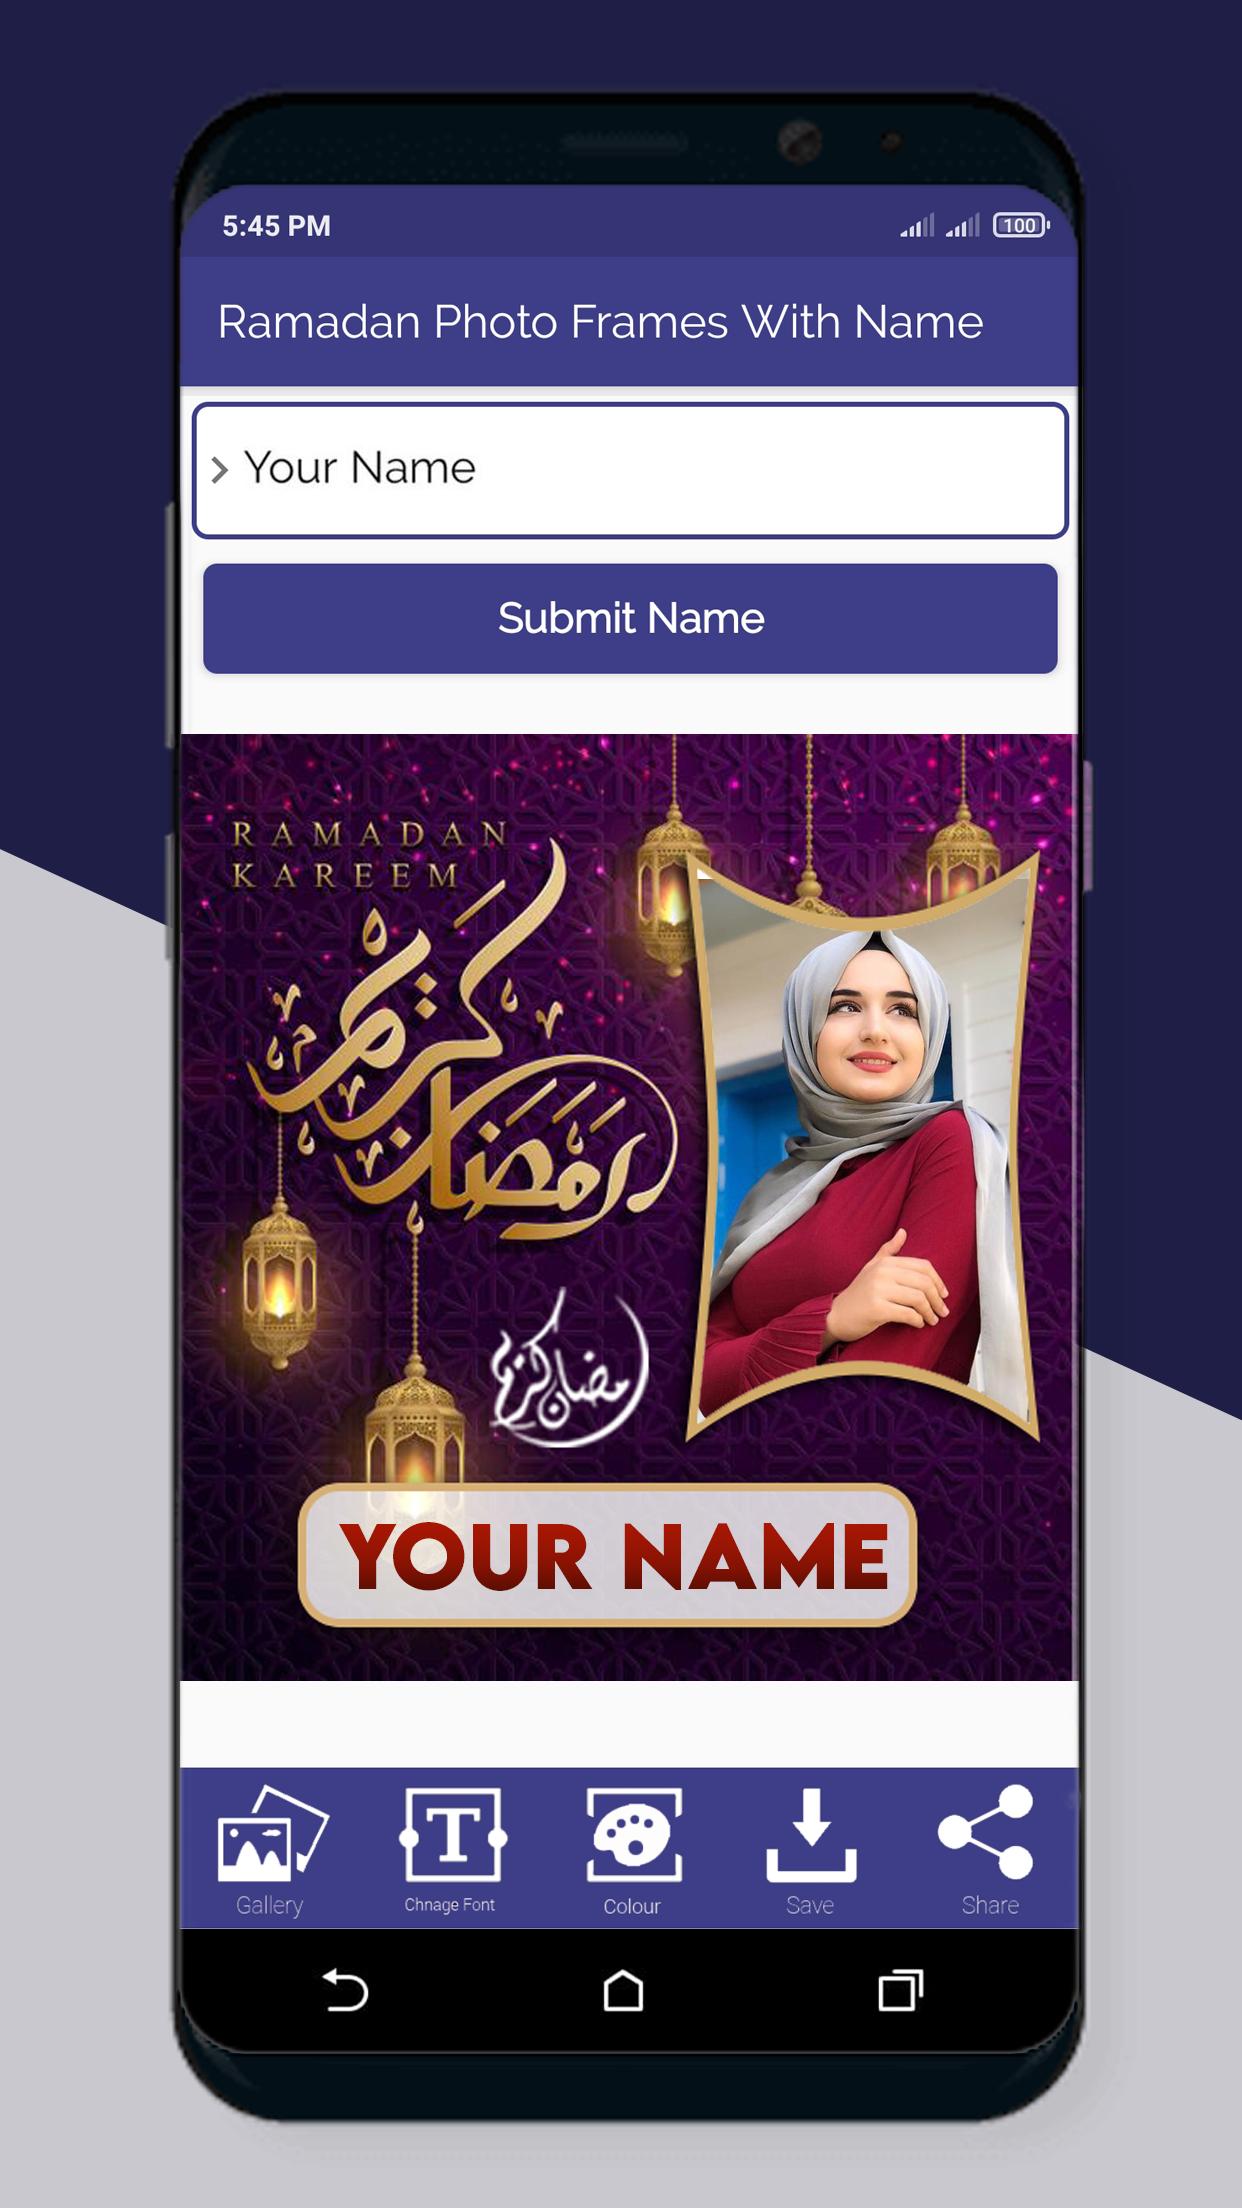 Ramadan 2021 Photo Frames With Name 3.0 Screenshot 5